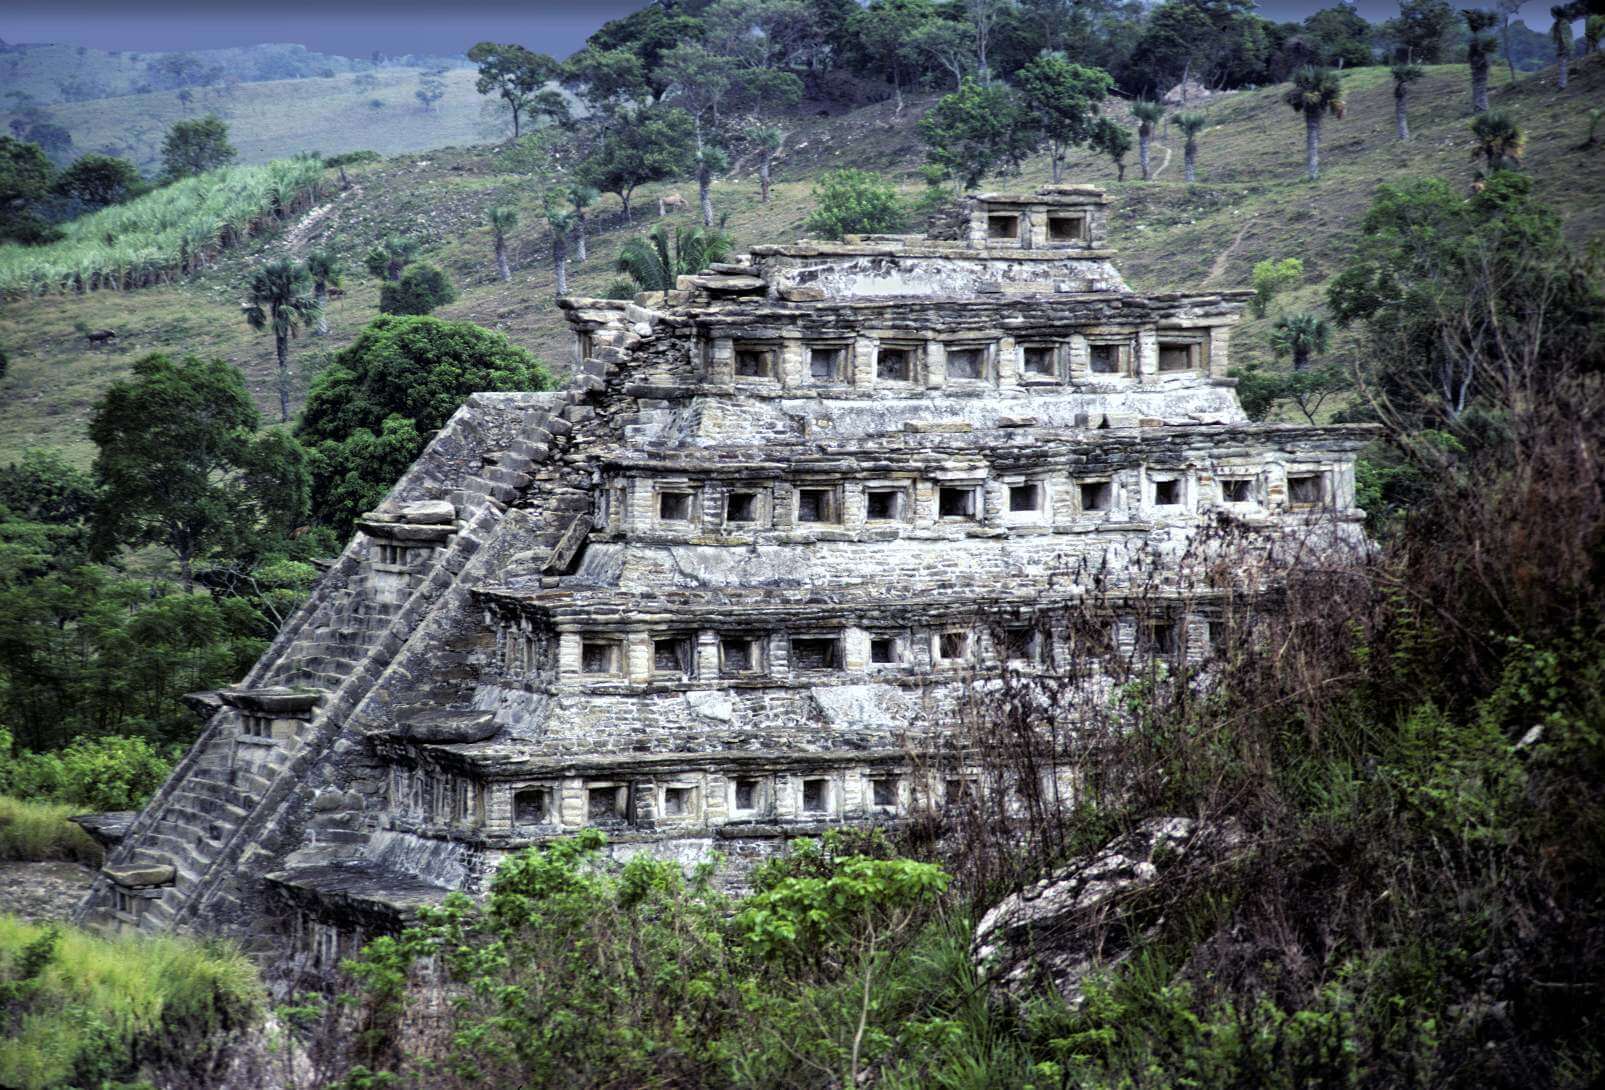 The Pyramid of the Niches at El Tajín, Veracruz, Mexico – 6th century CE.